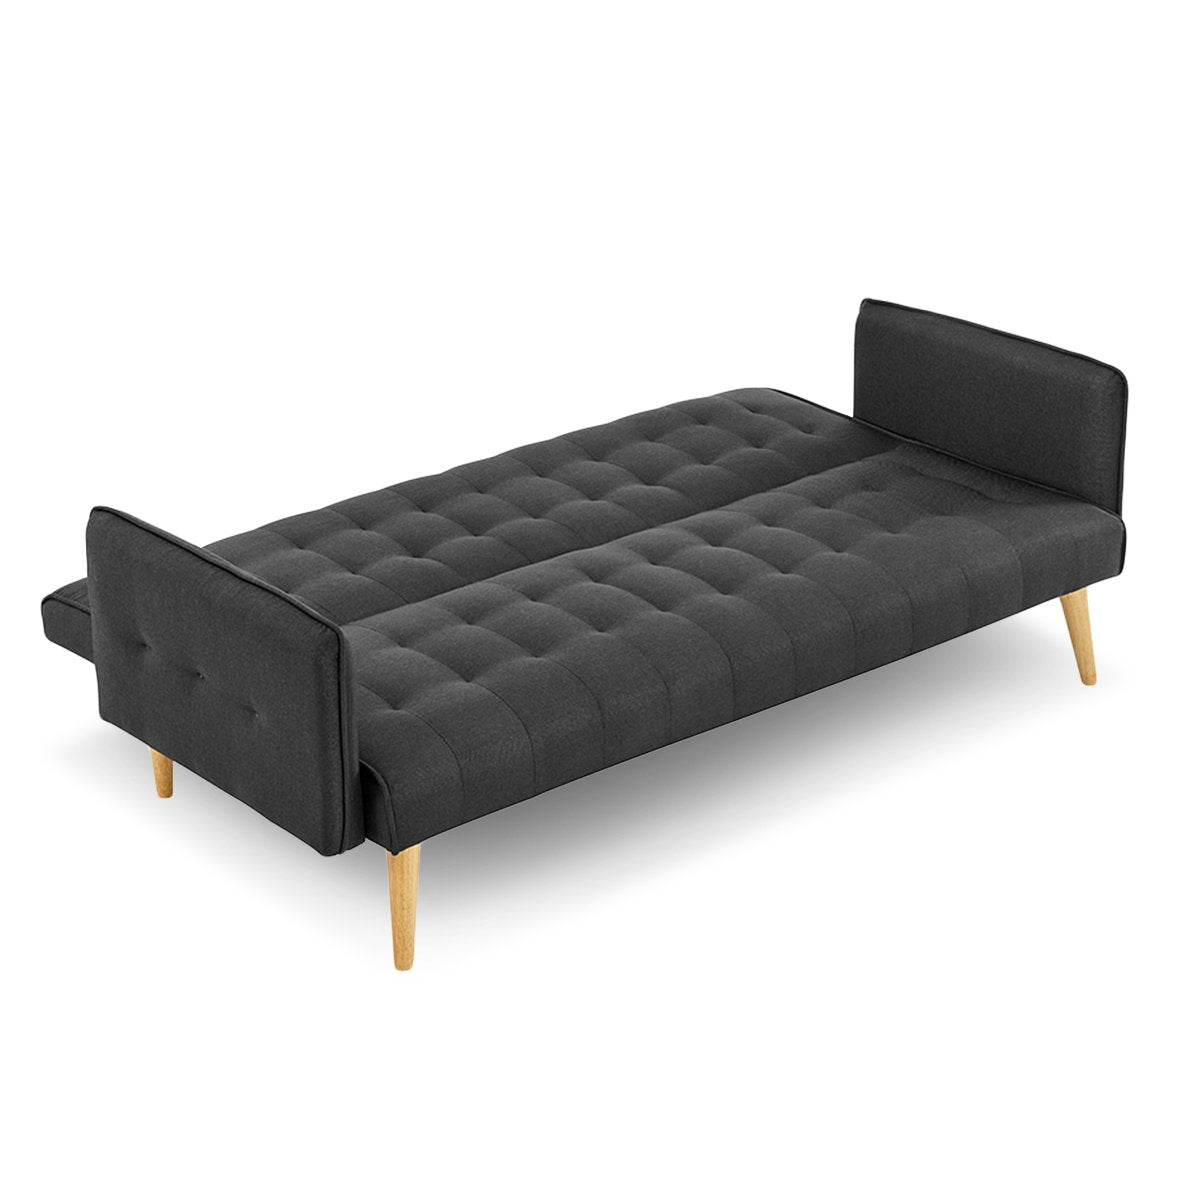 Sarantino 3 Seater Modular Linen Fabric Sofa Bed Couch - Black - 0